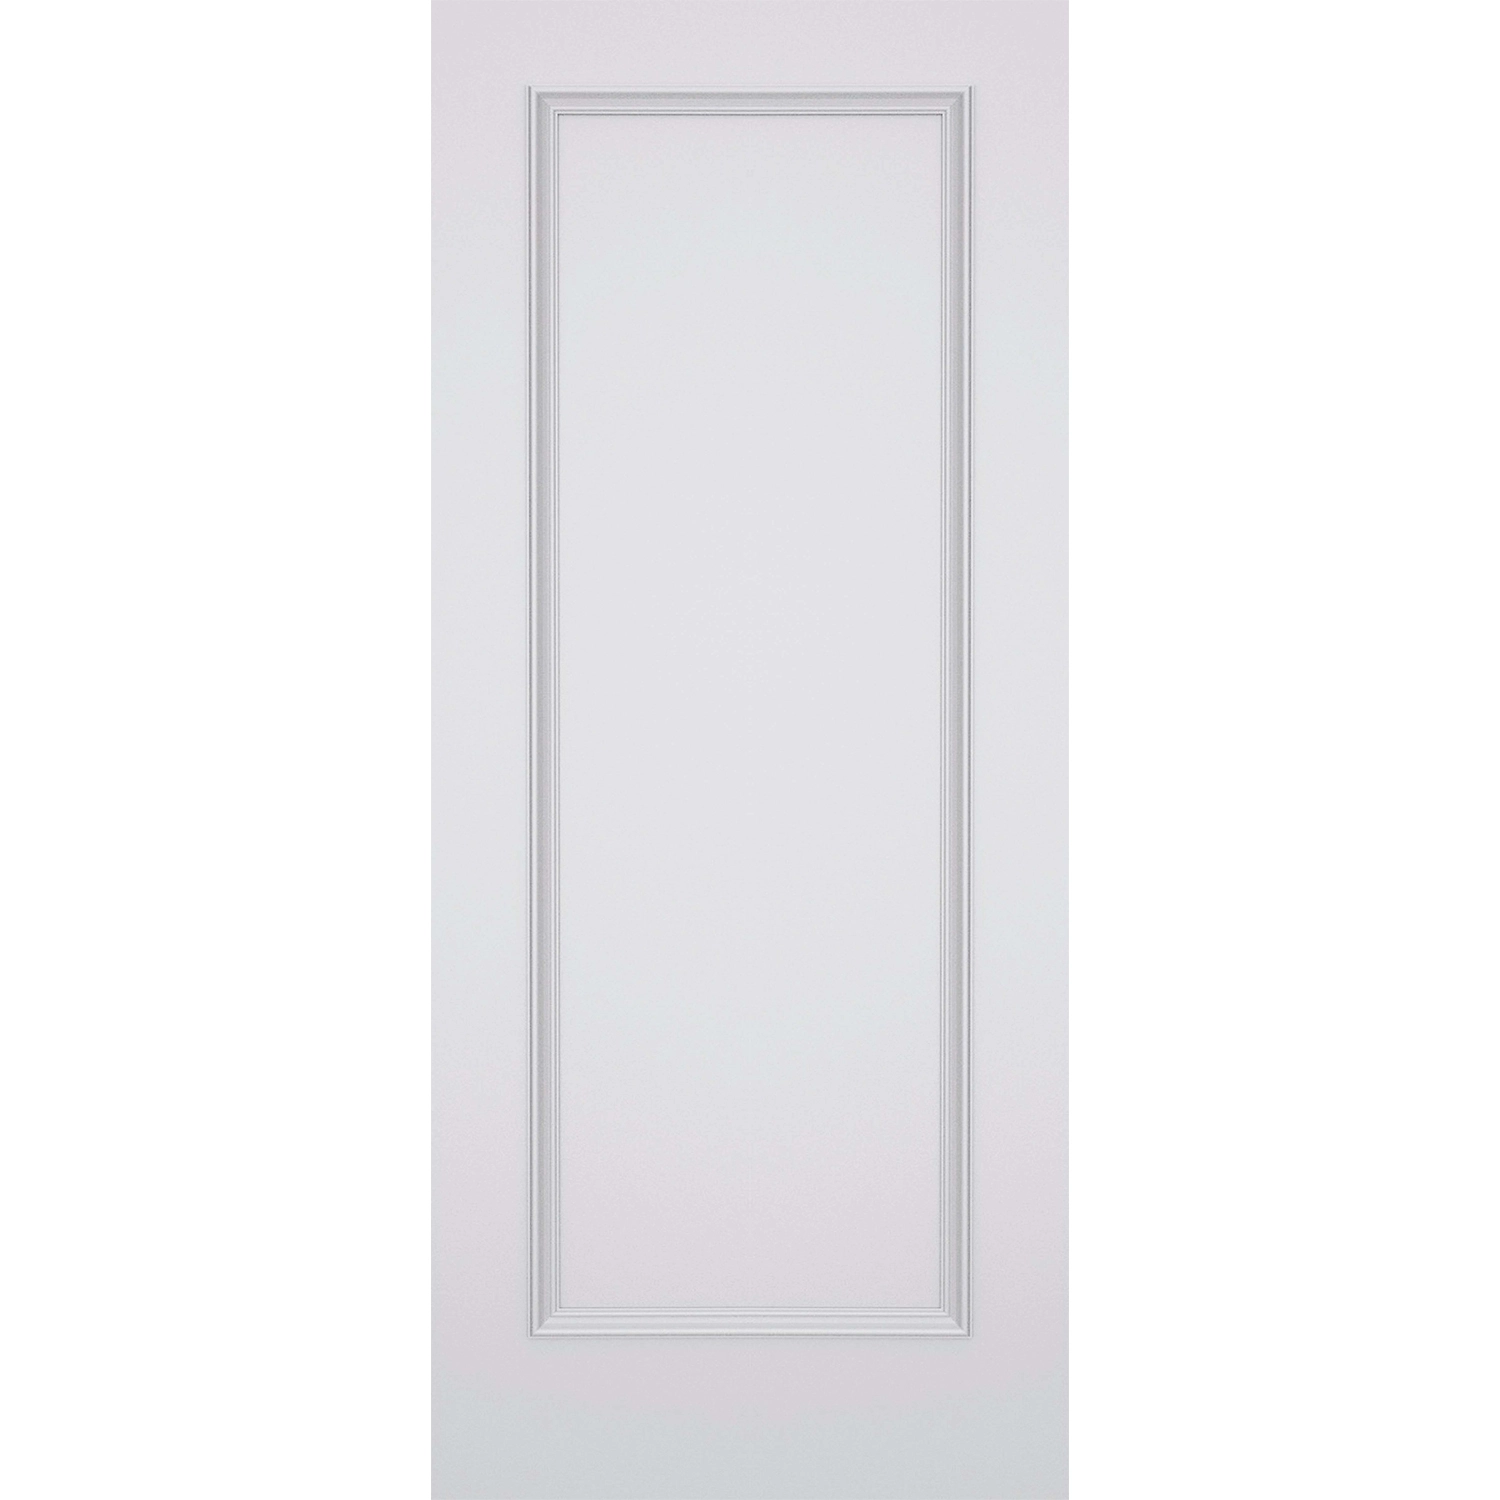 1 Panel 80 x 34 x 1-3/8 Smooth Hollow Door Raised